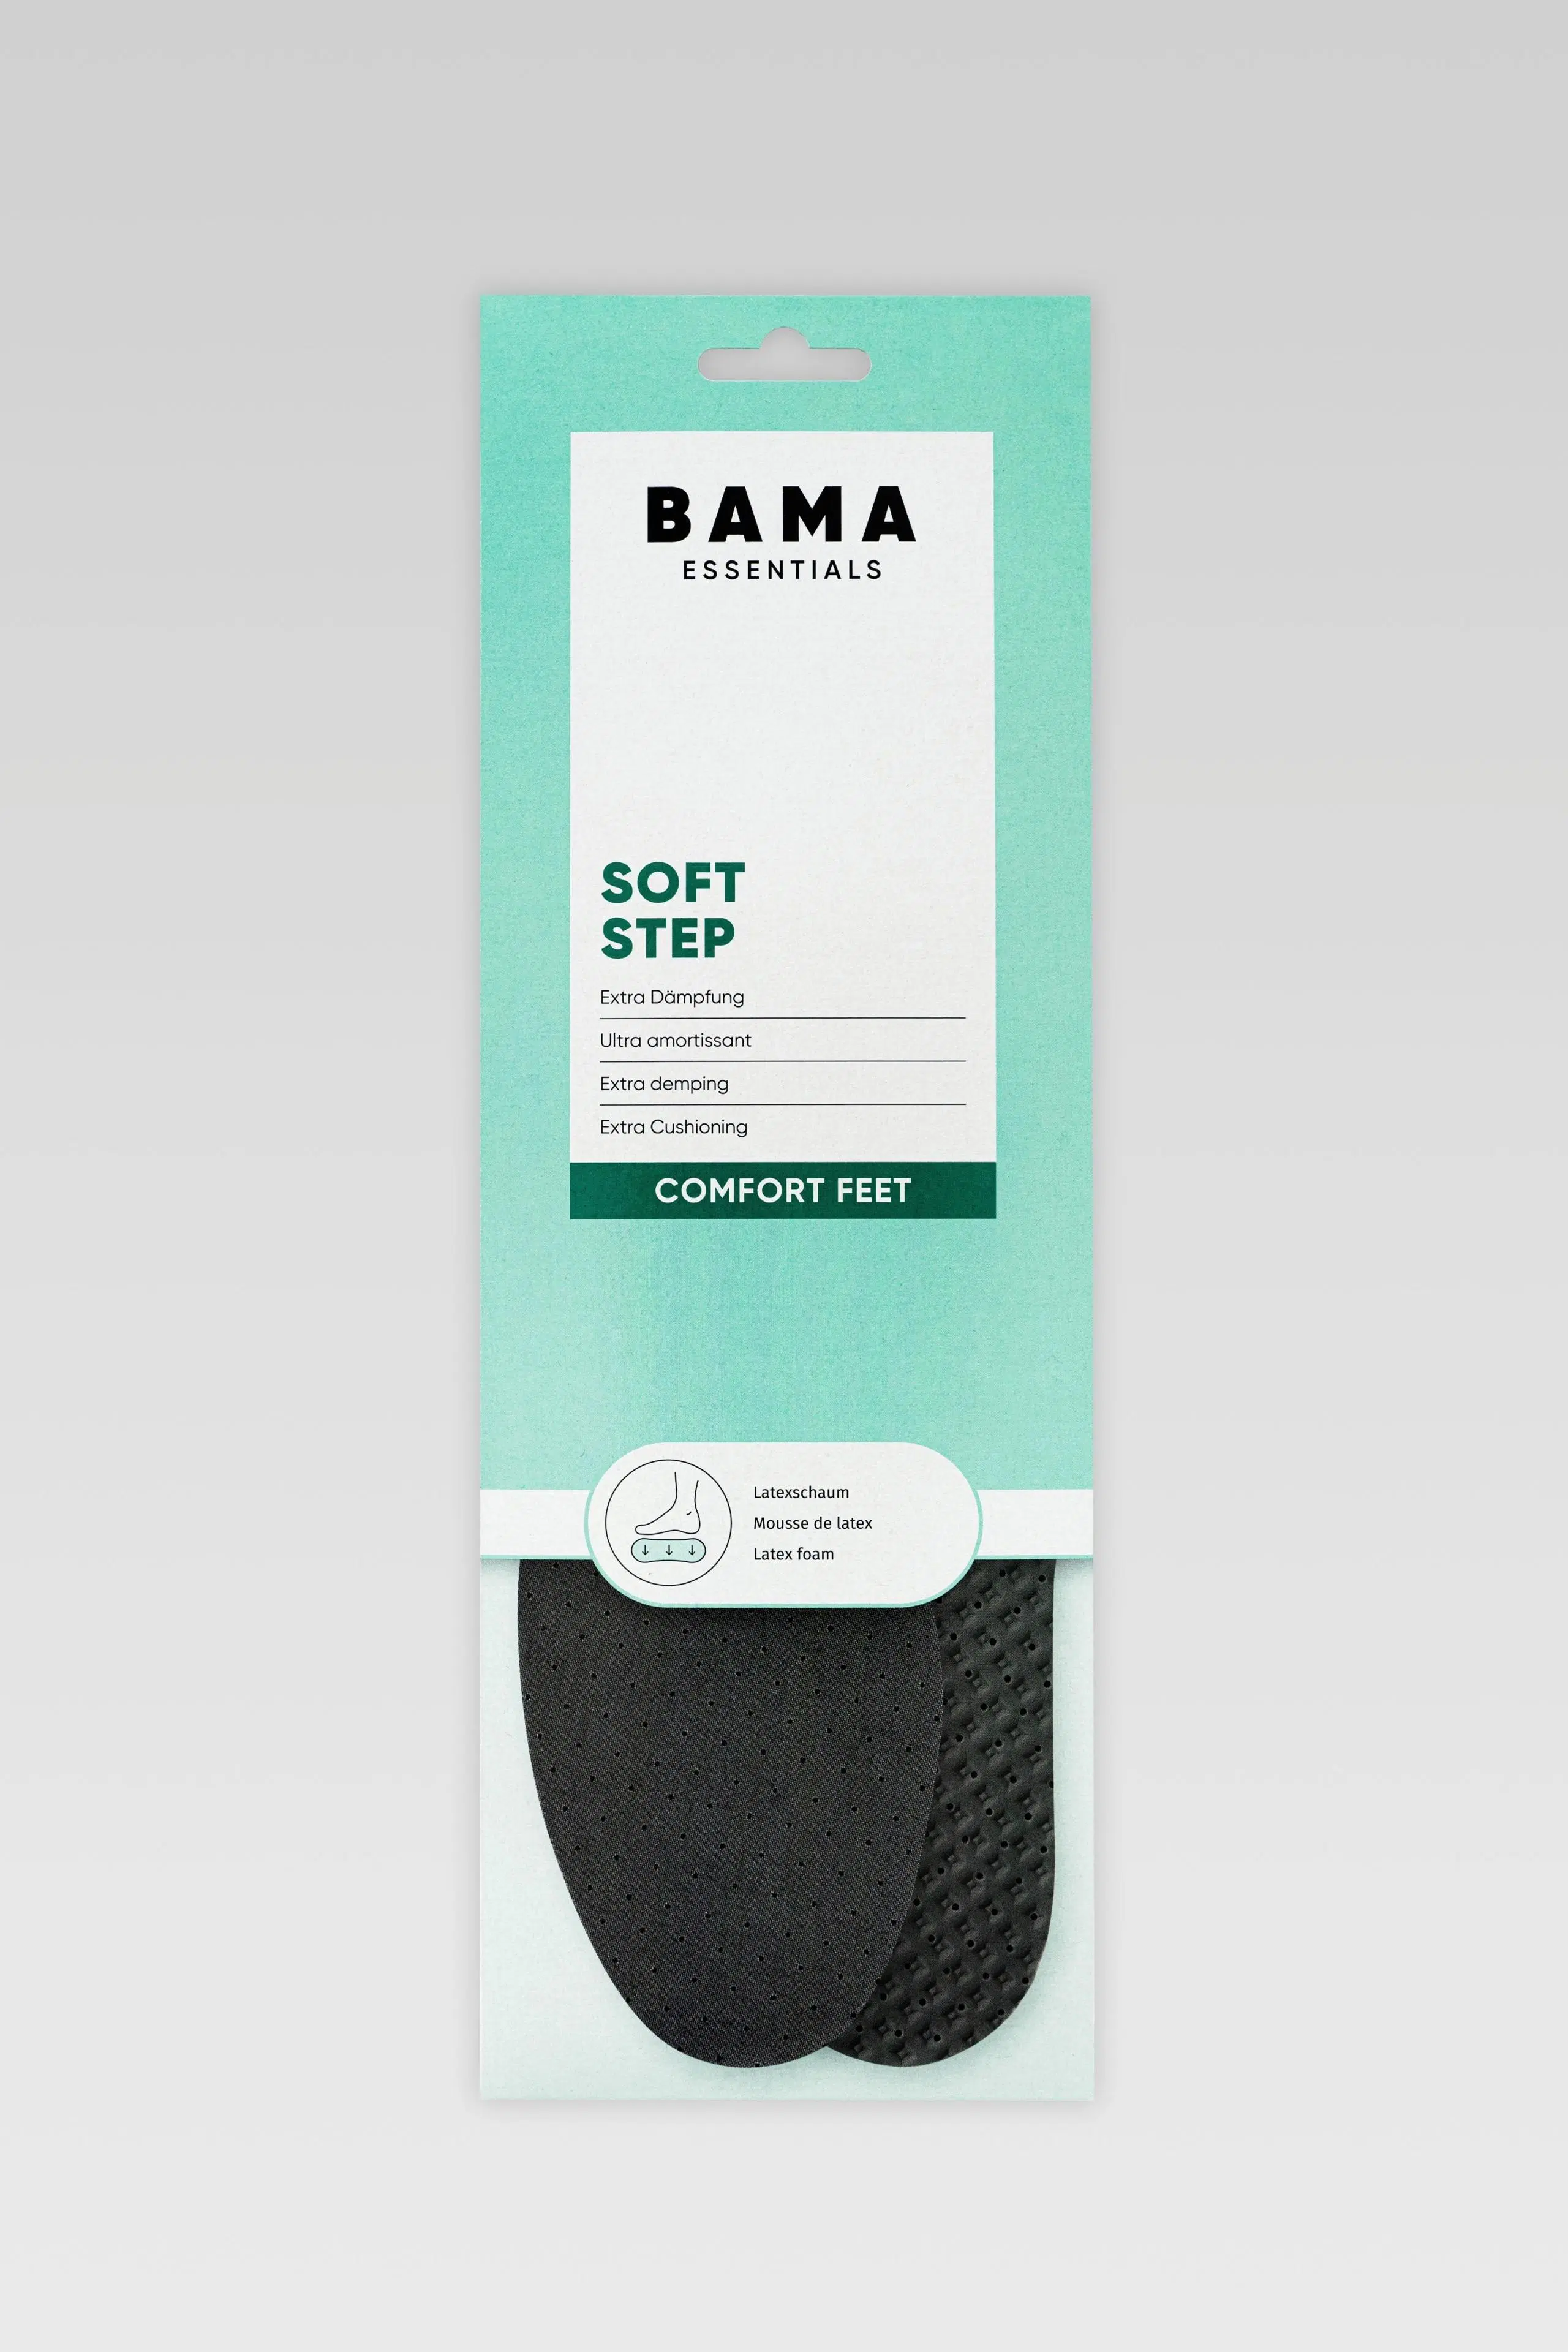 BAMA Soft Step 46/47